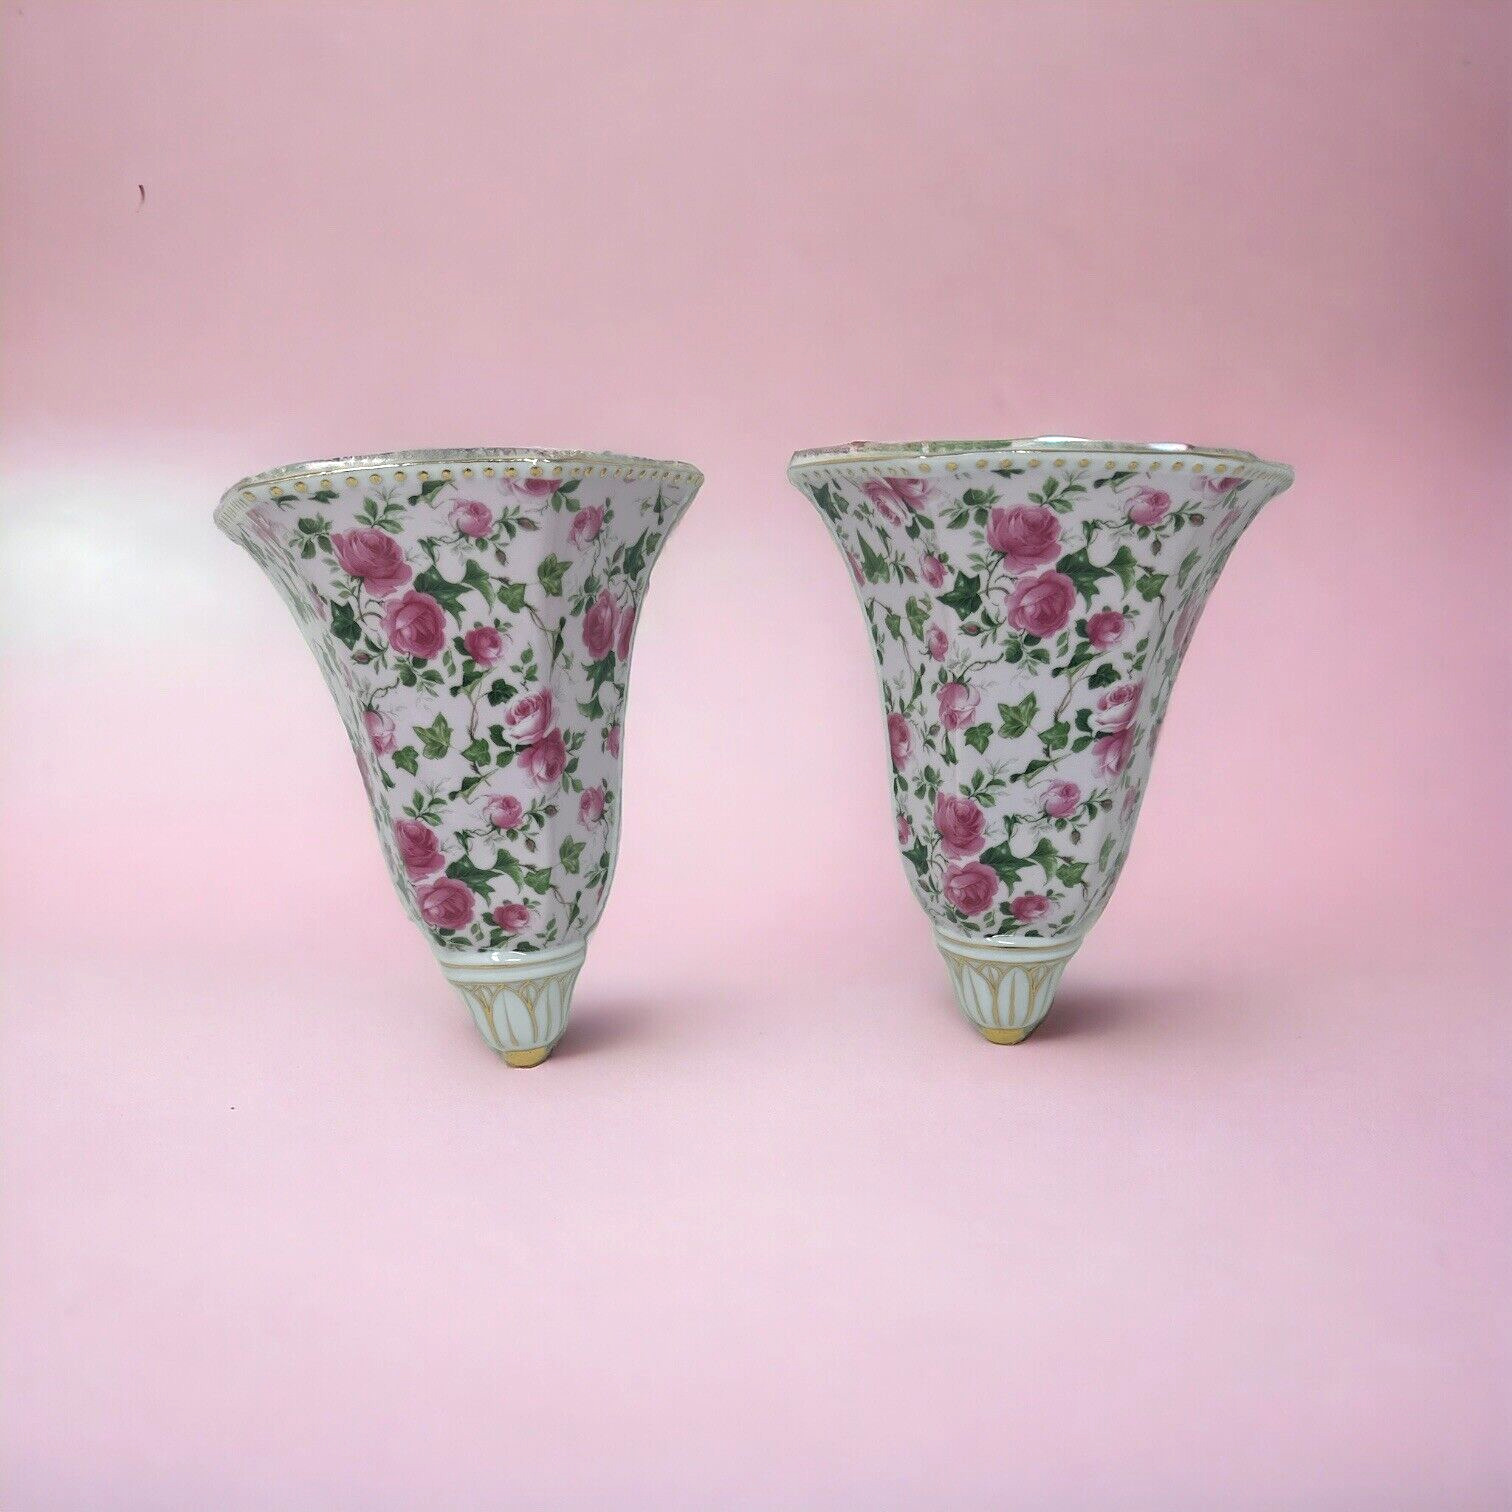 Formalities Baum Bros Wall Pocket Vases Victorian Rose Chintz Porcelain Set of 2